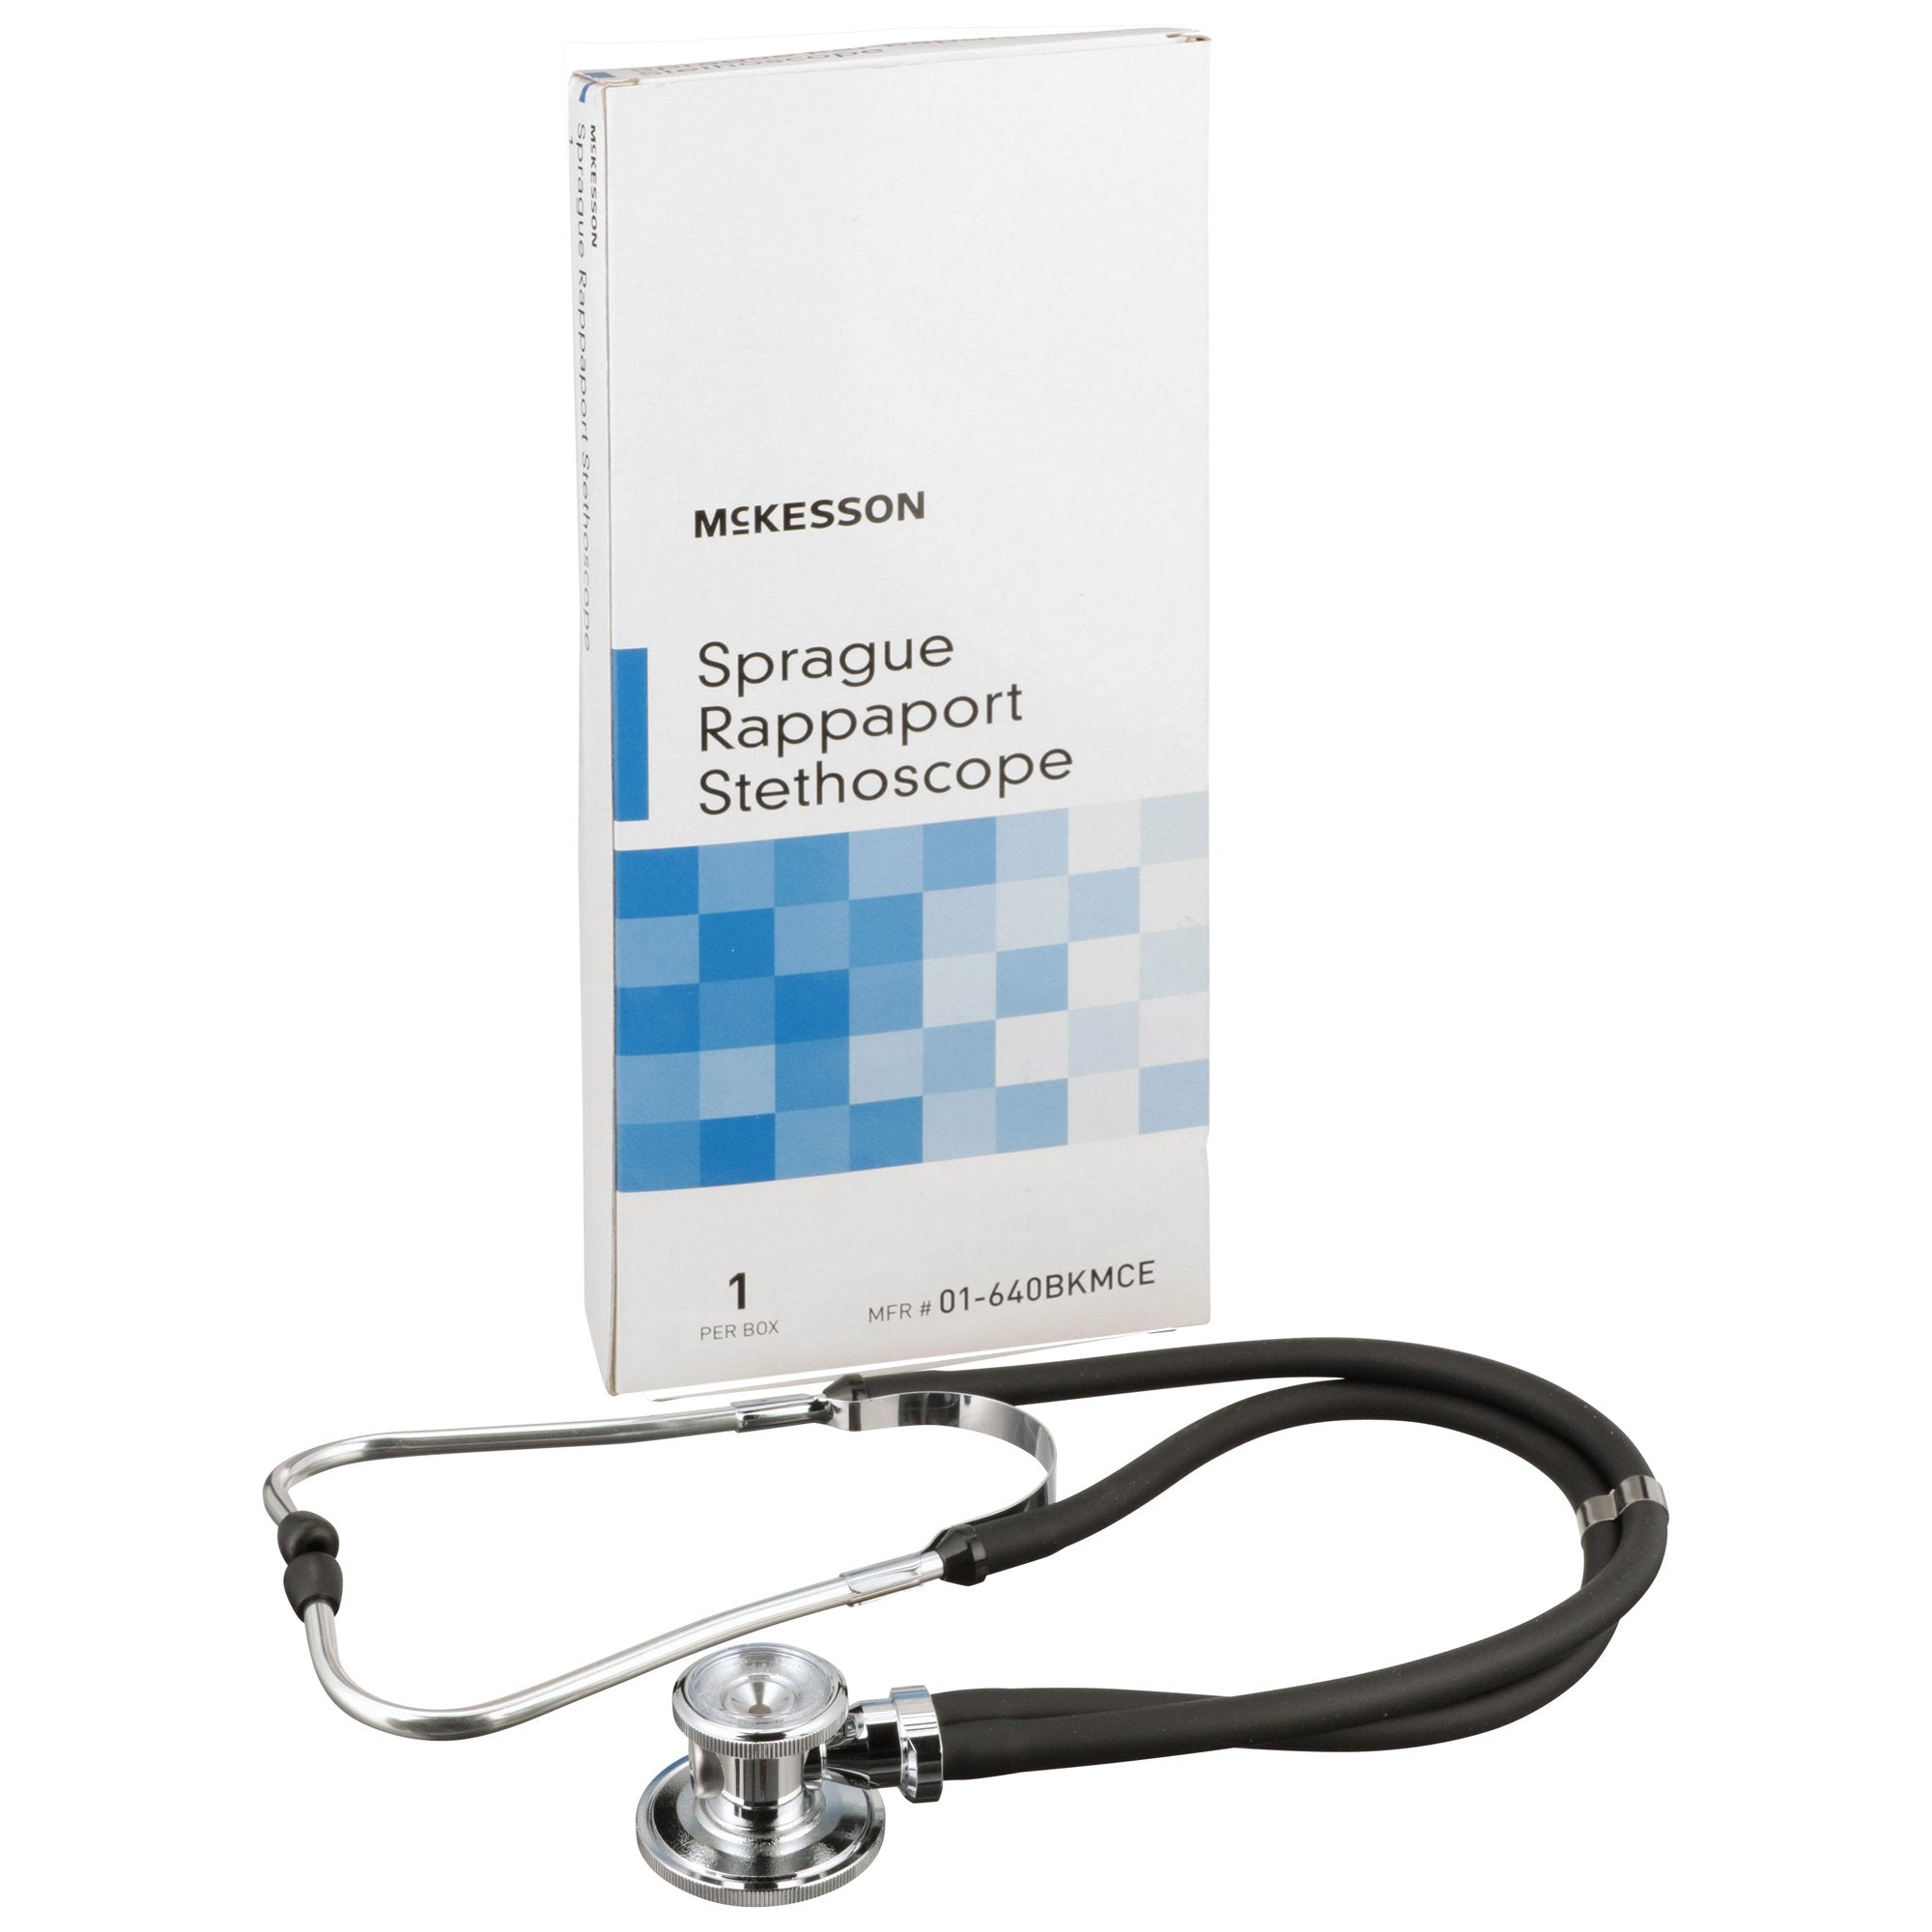 McKesson Sprague Rappaport Stethoscope, Black -Each